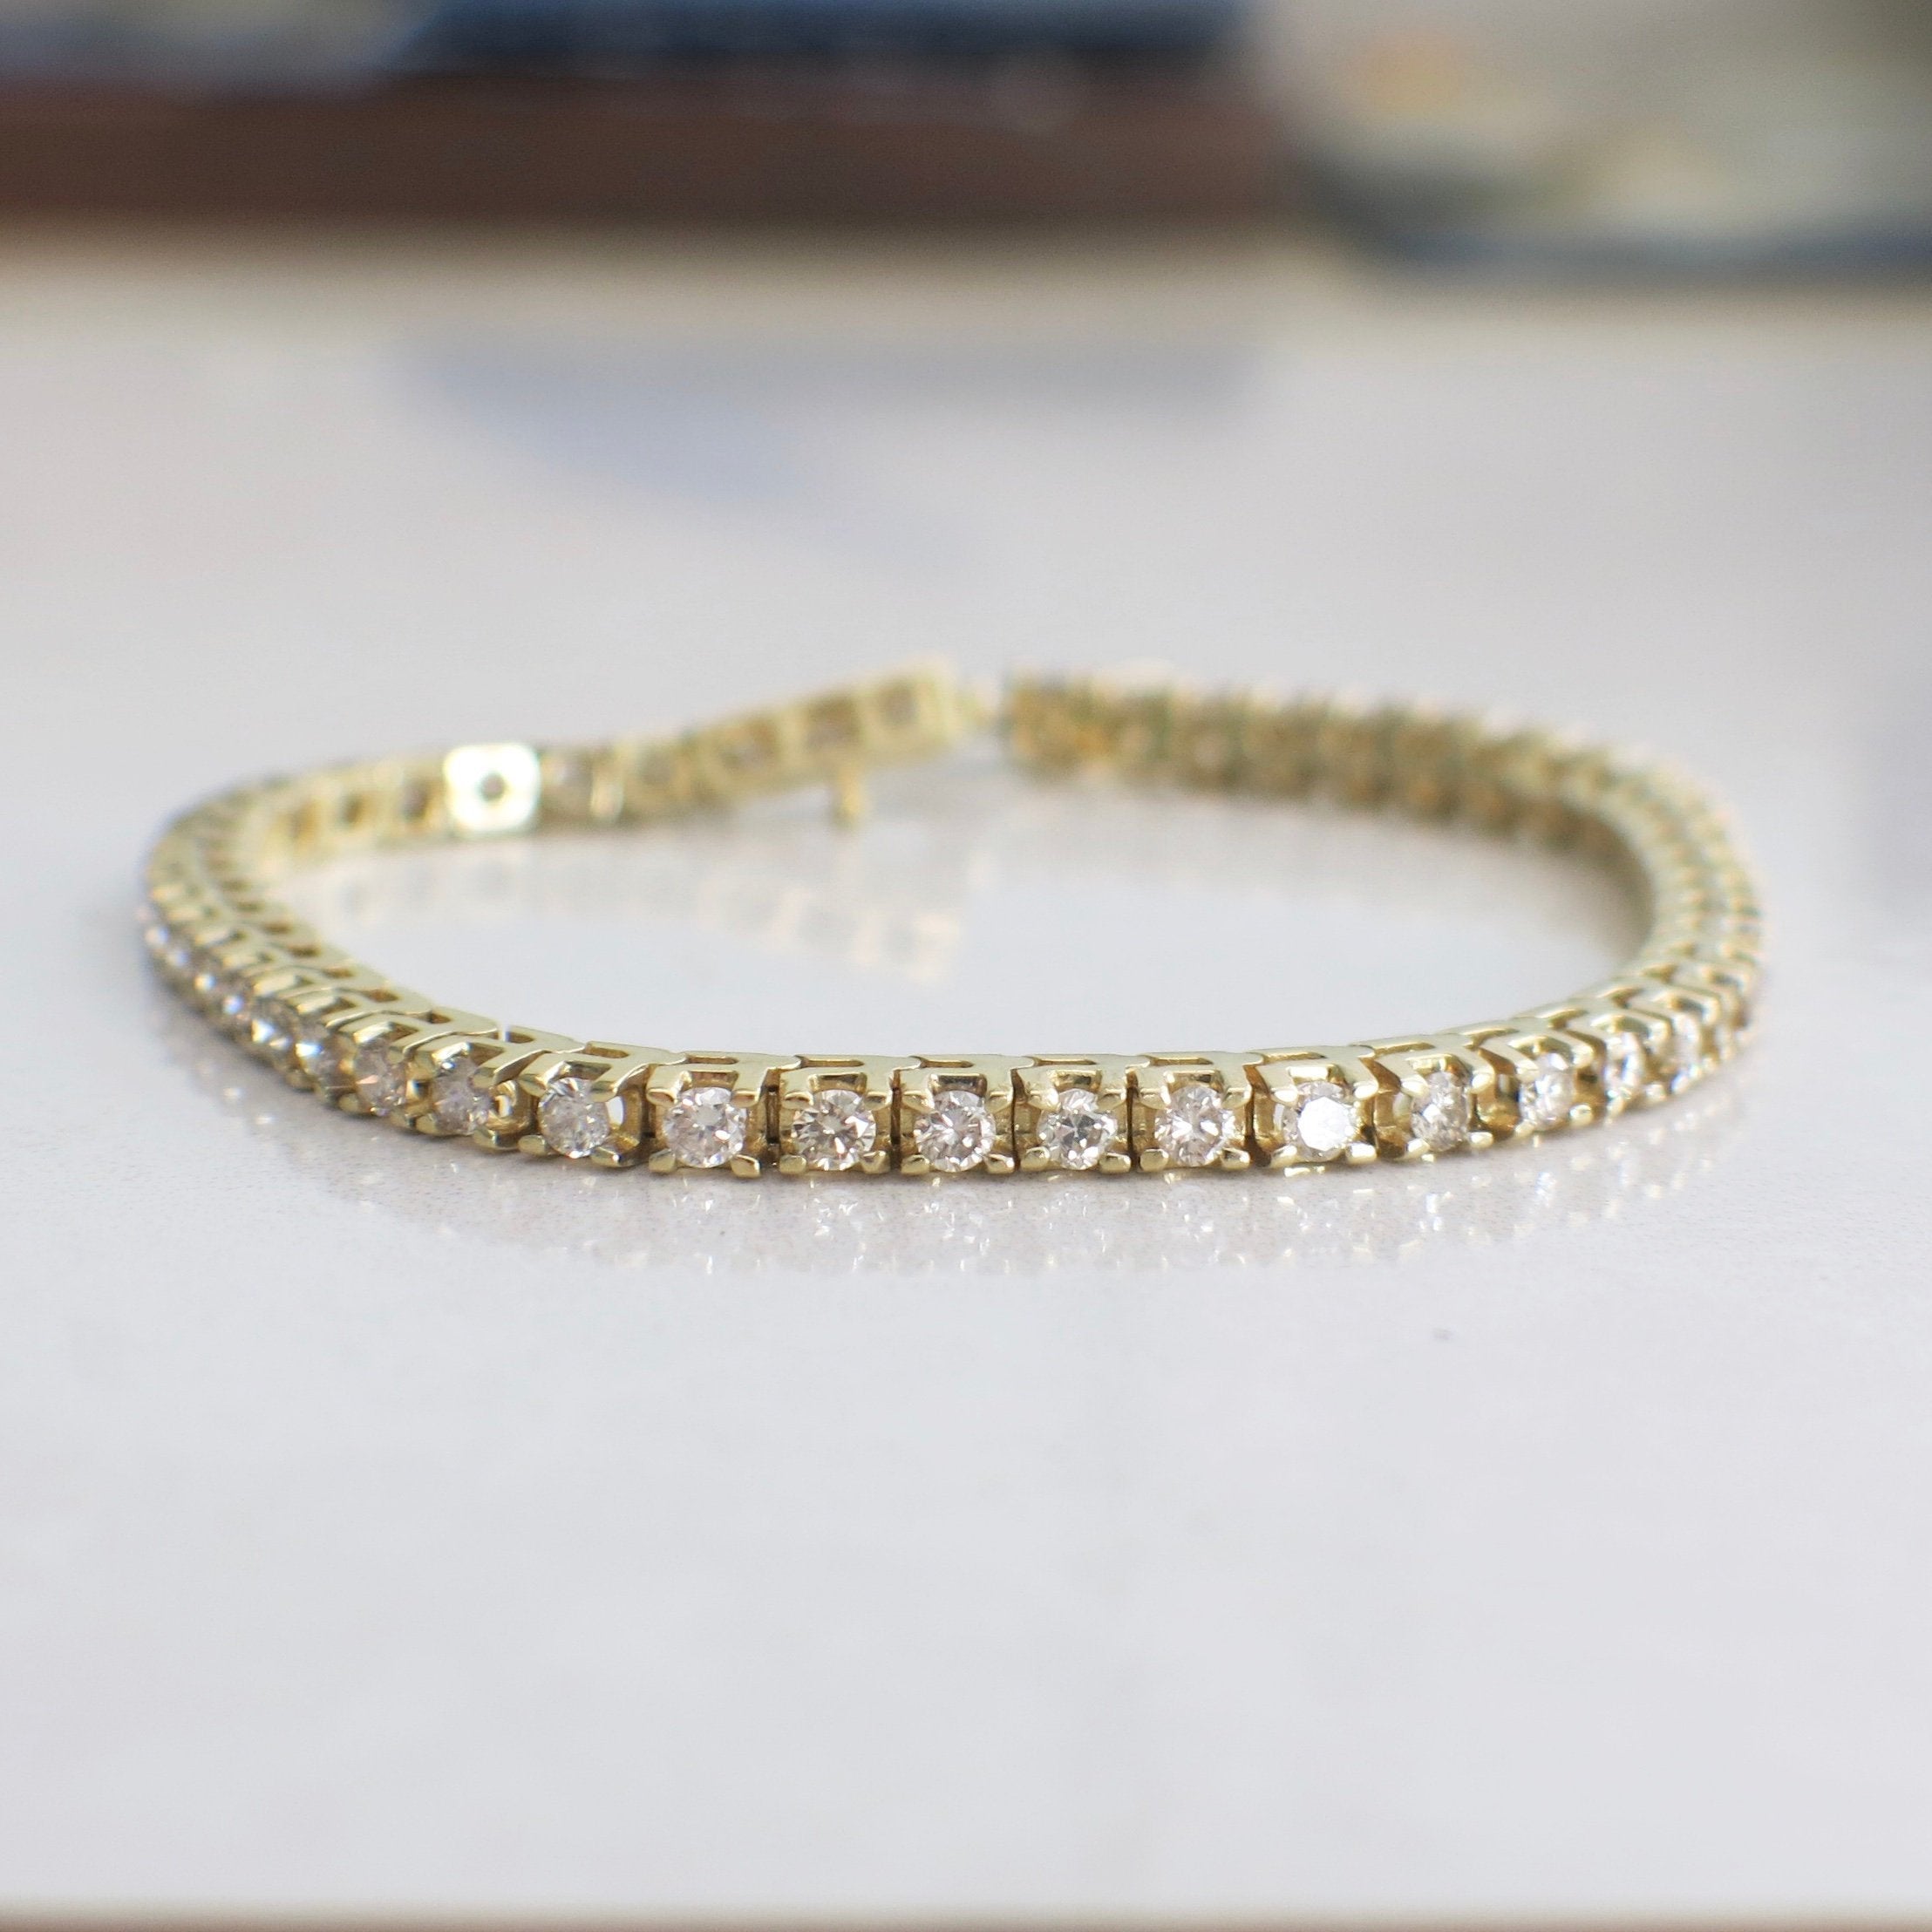 Antique Diamond Rope Bracelet in Yellow Gold | New York Jewelers Chicago